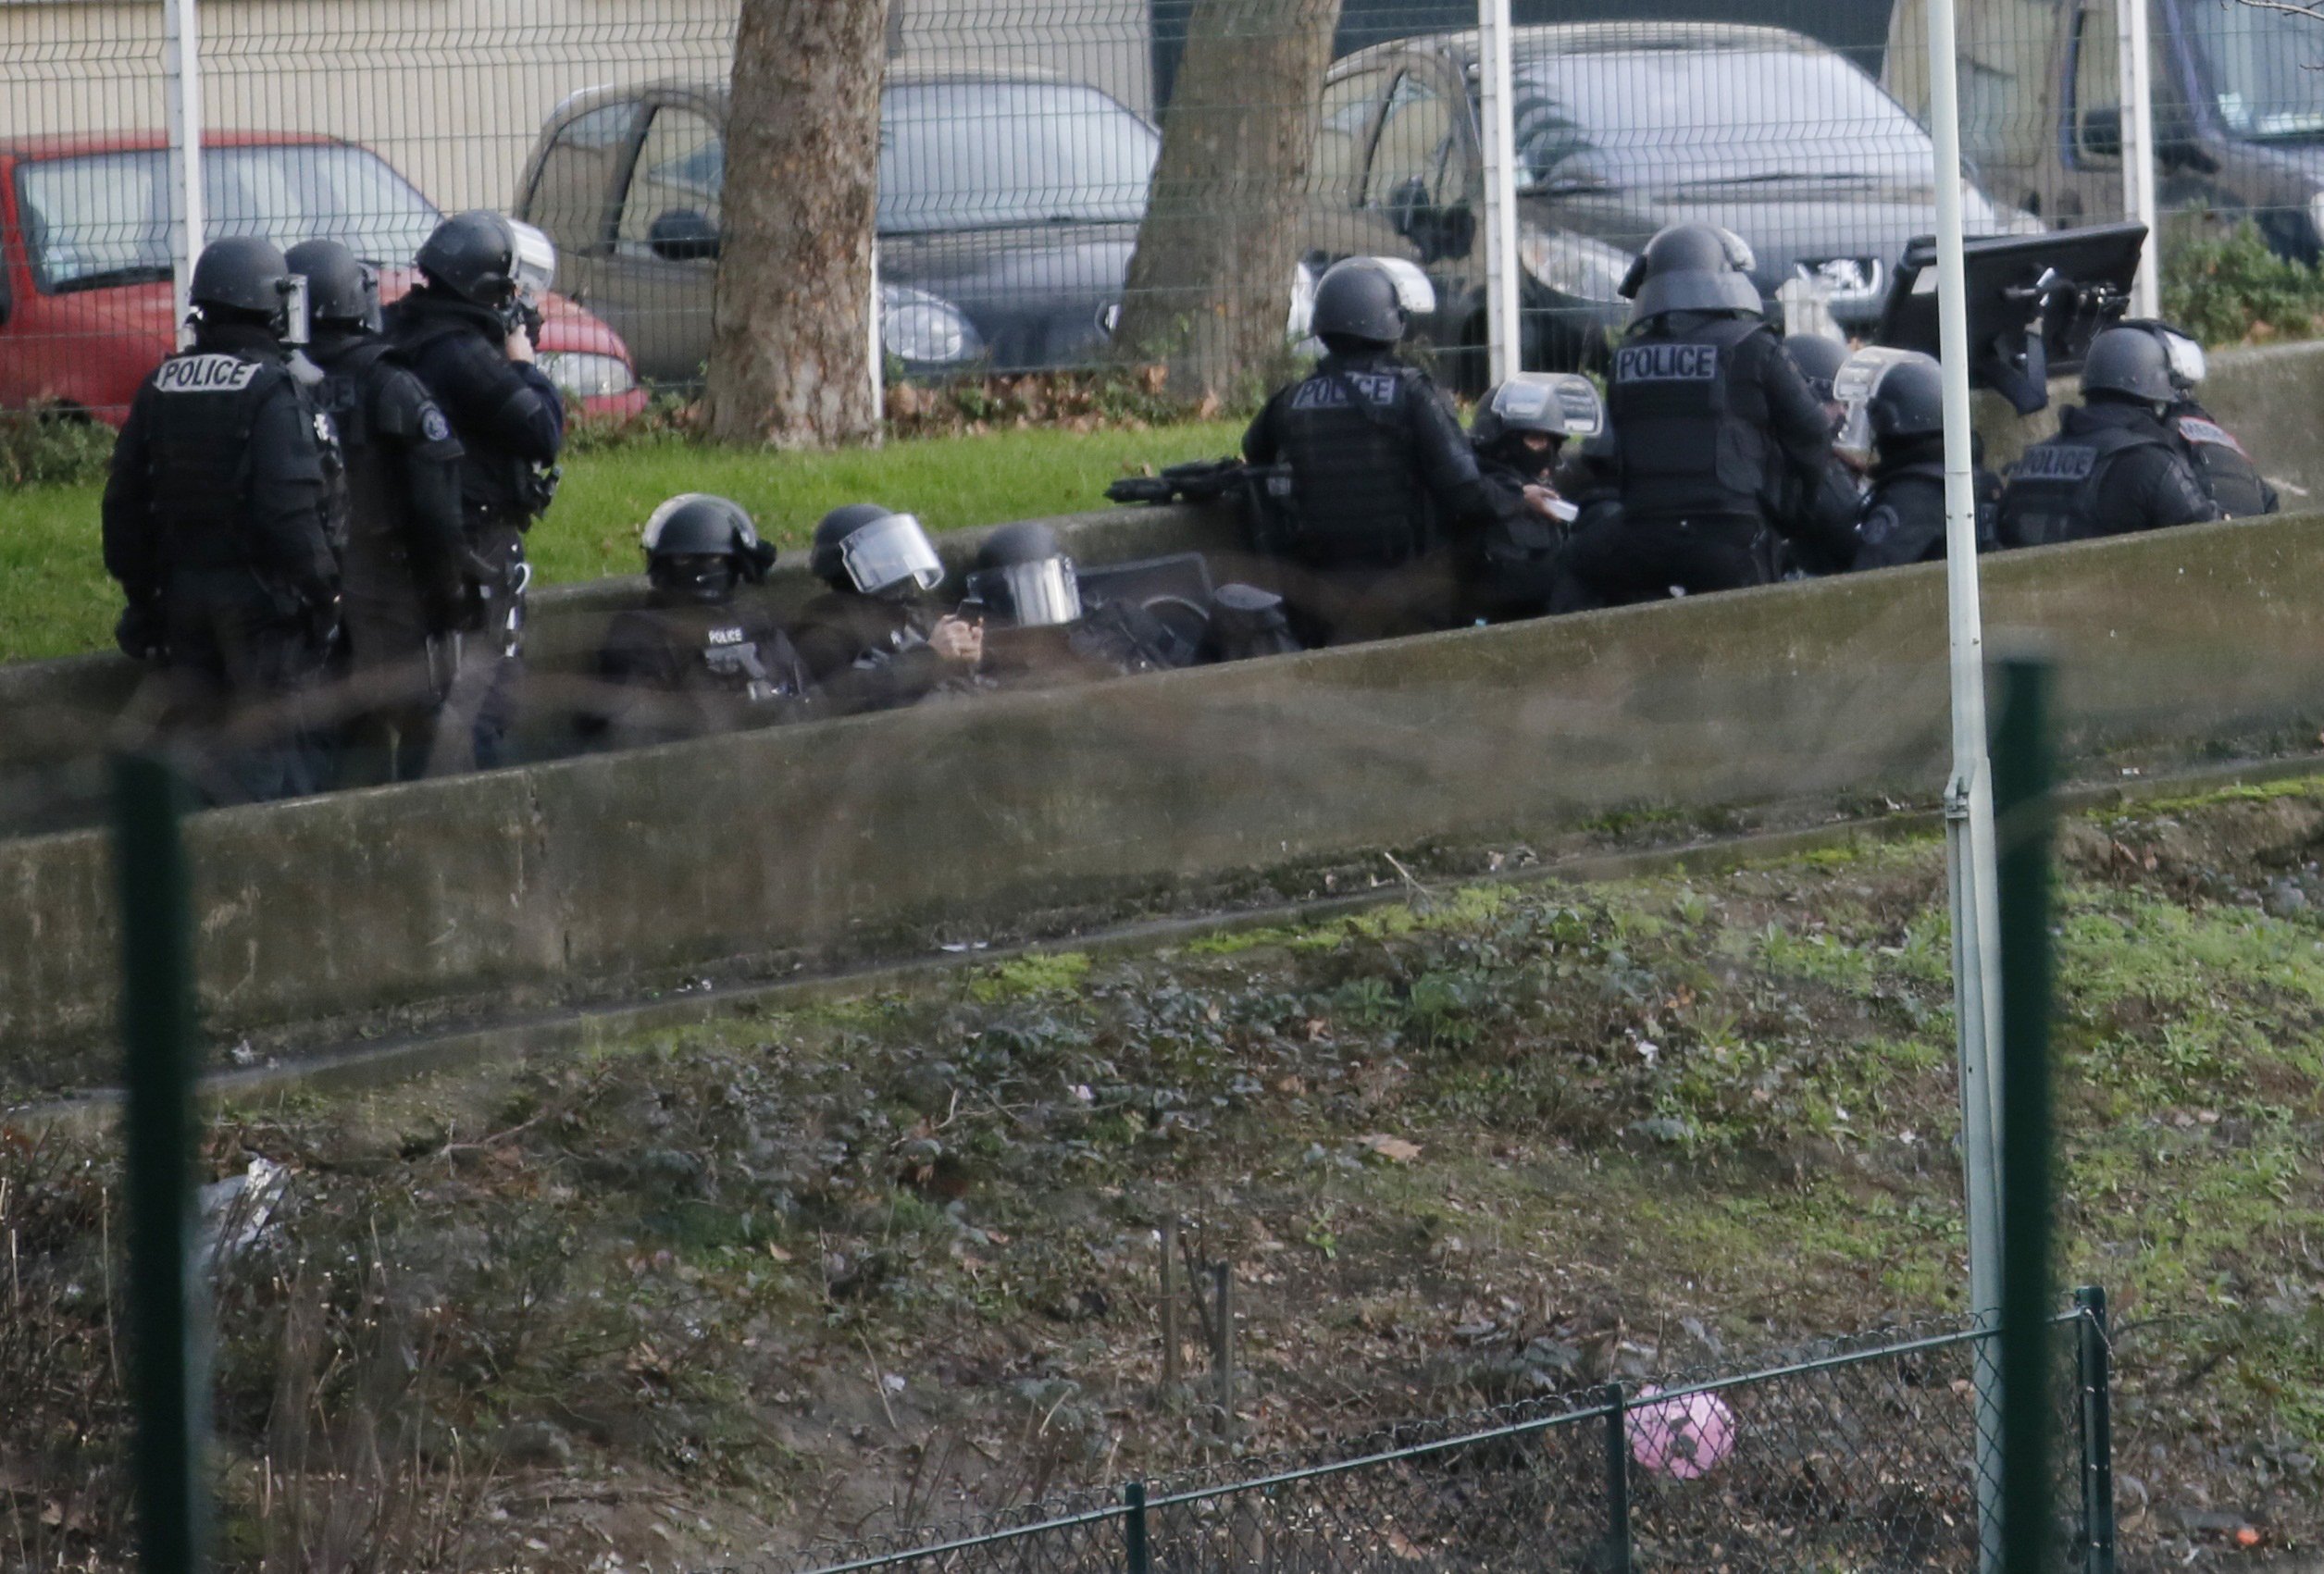 Paris shooting cases demonstrate spy agencies' limits